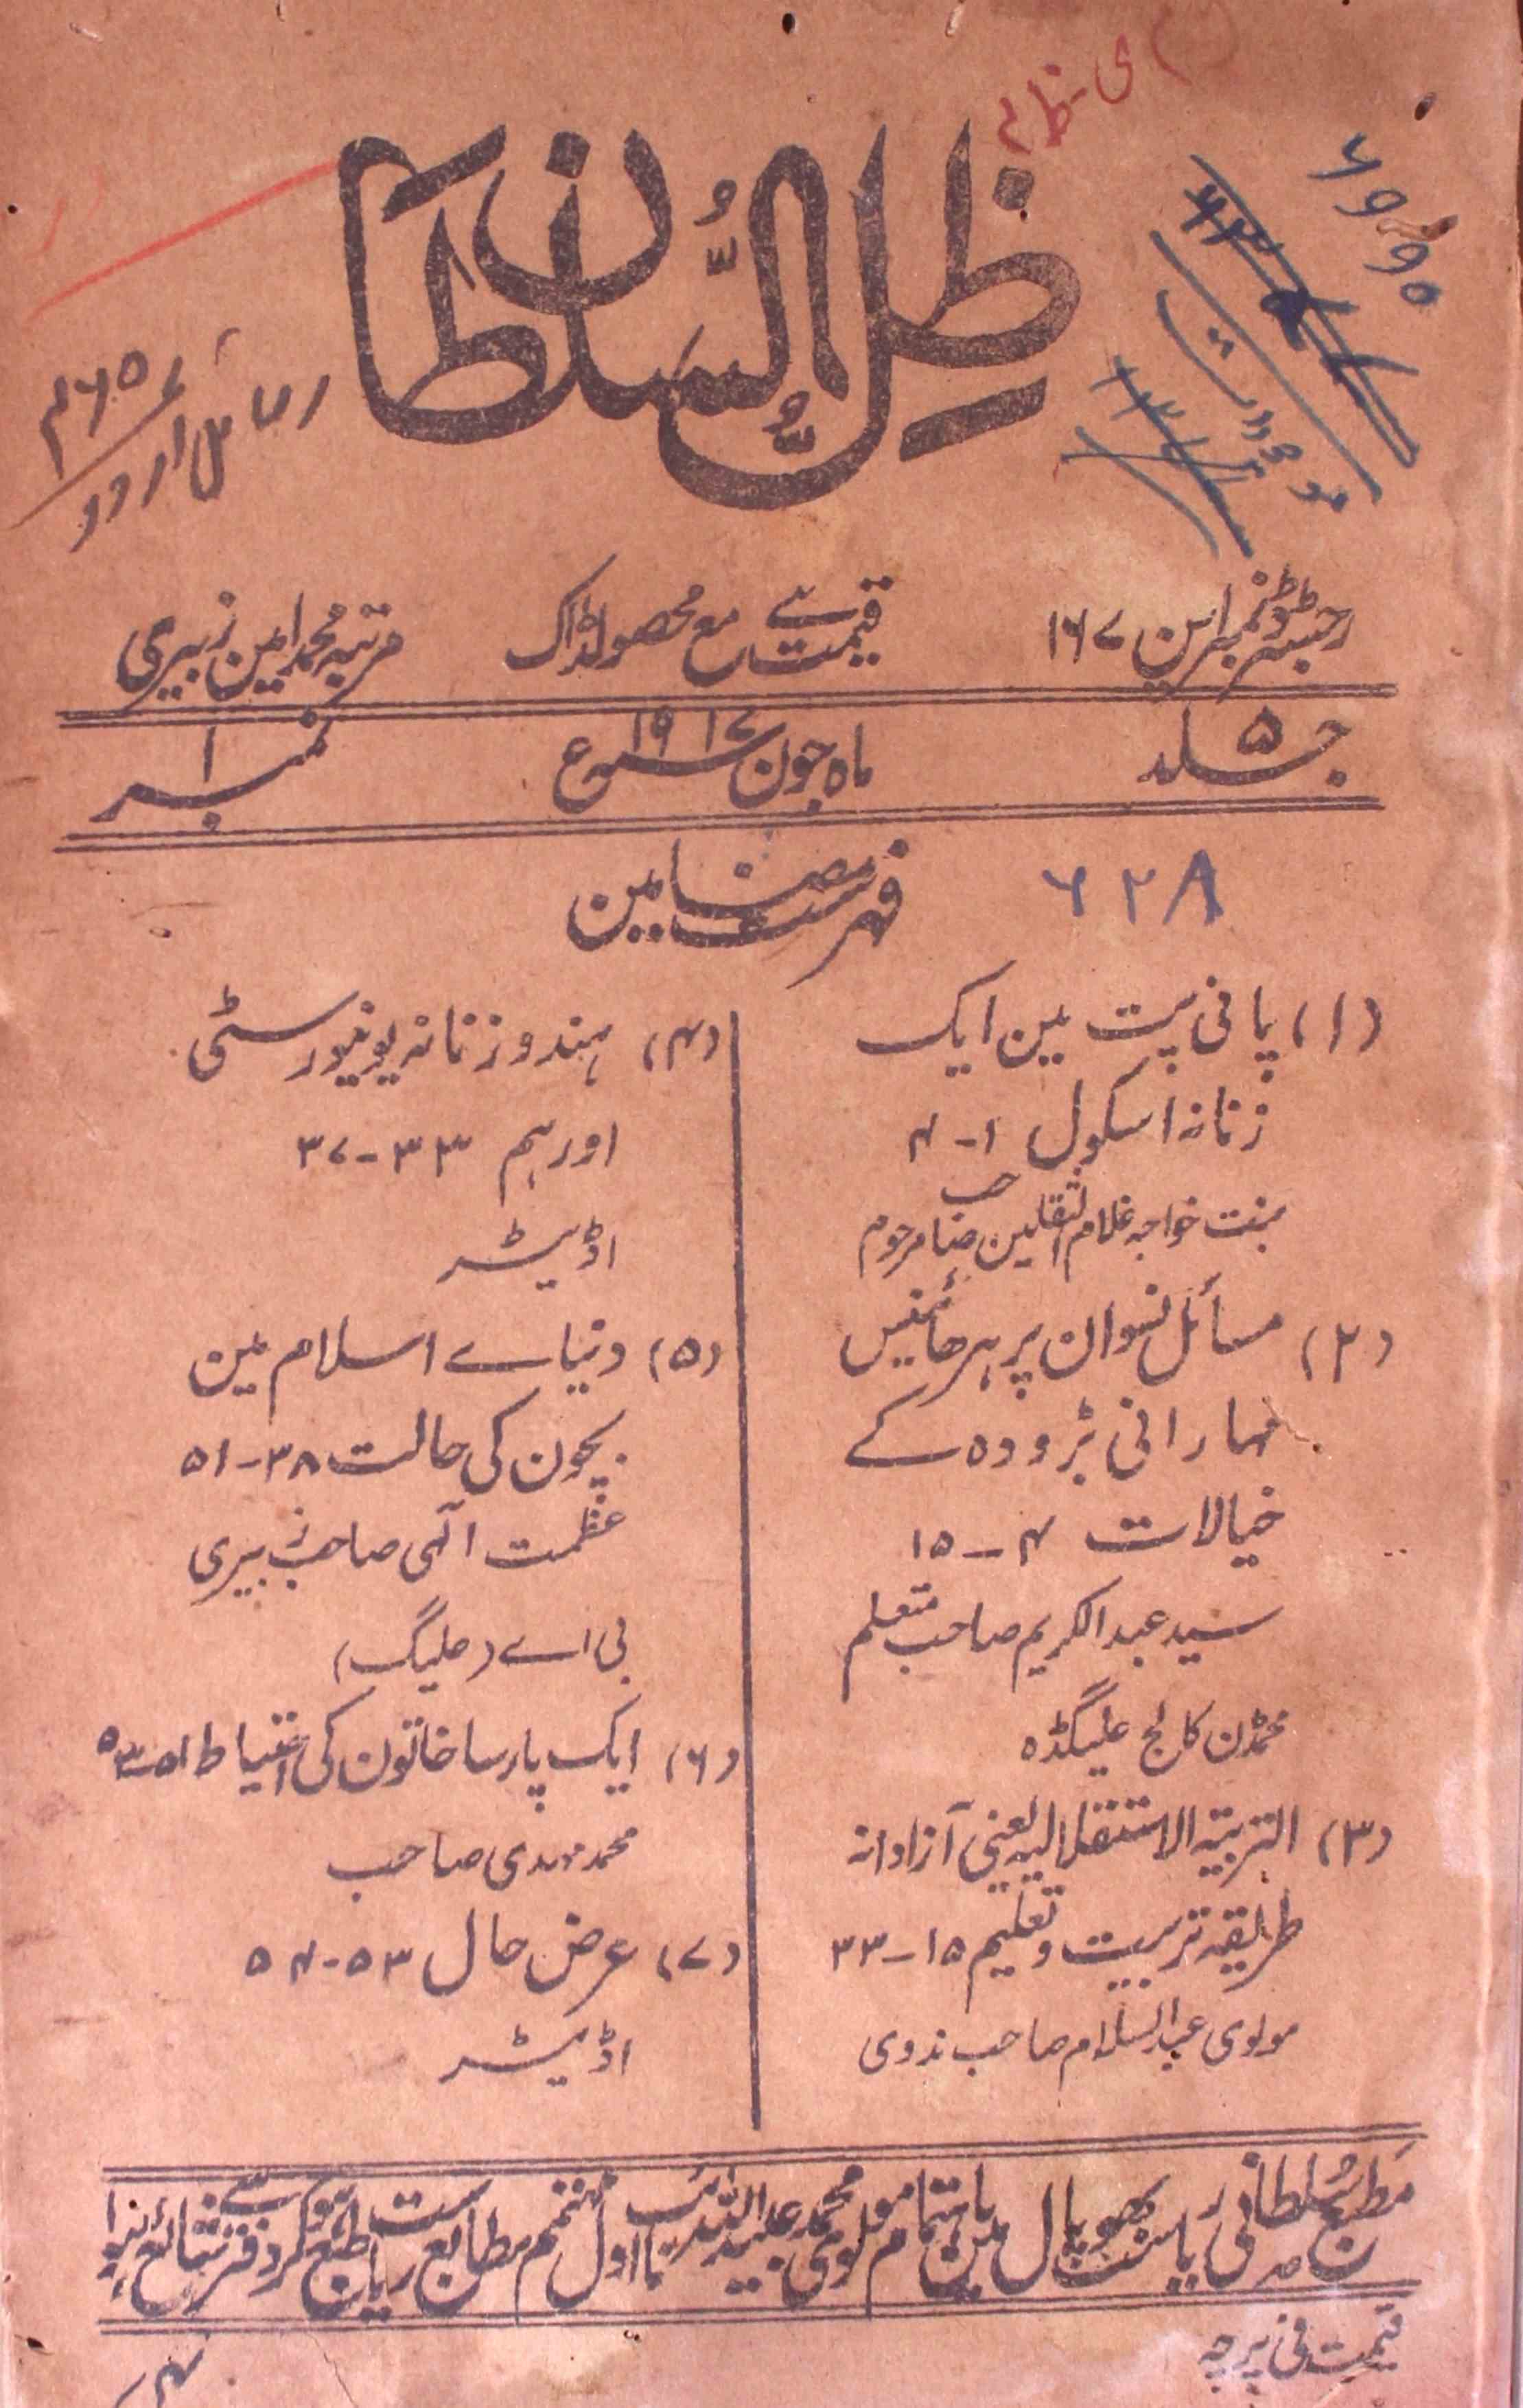 Zillus Sultan Jild 5 No. 1 - June 1917-Shumara Number-001